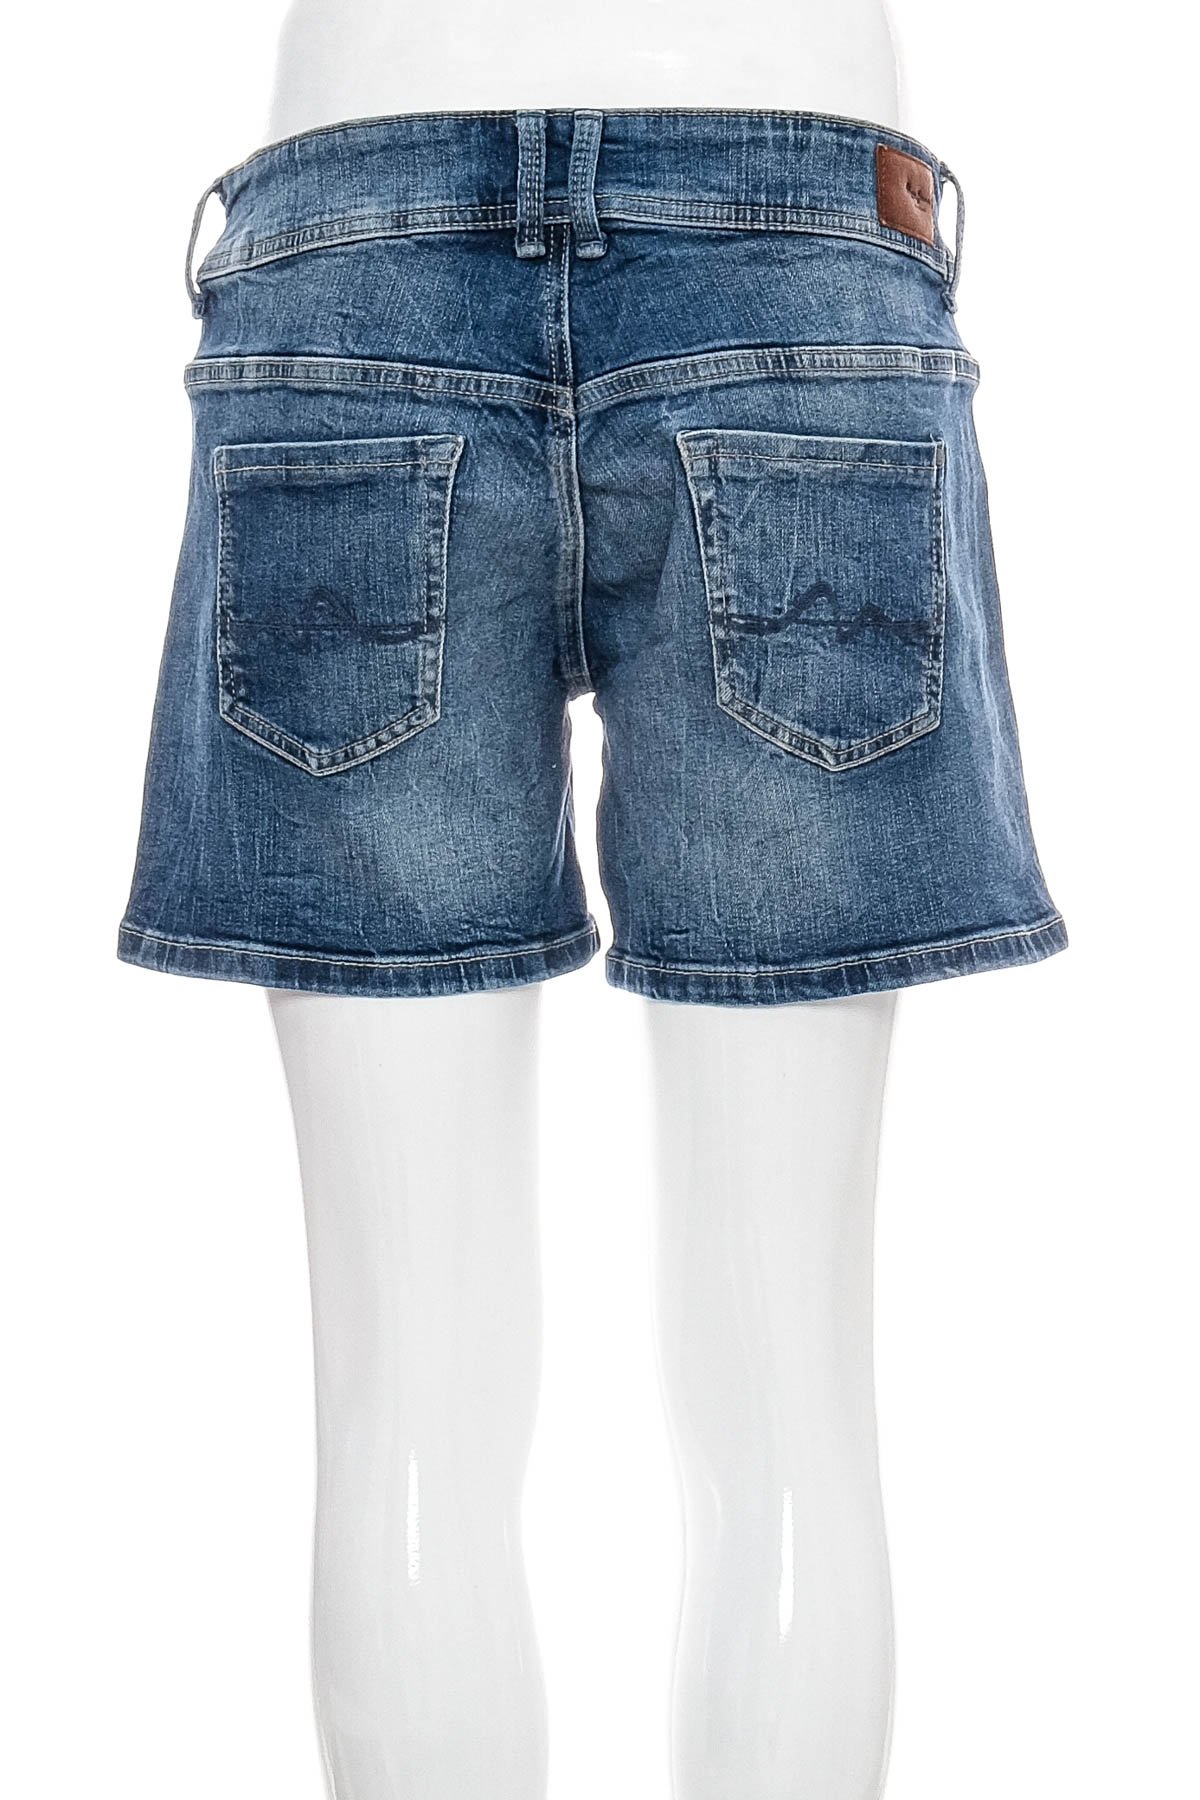 Female shorts - Pepe Jeans - 1